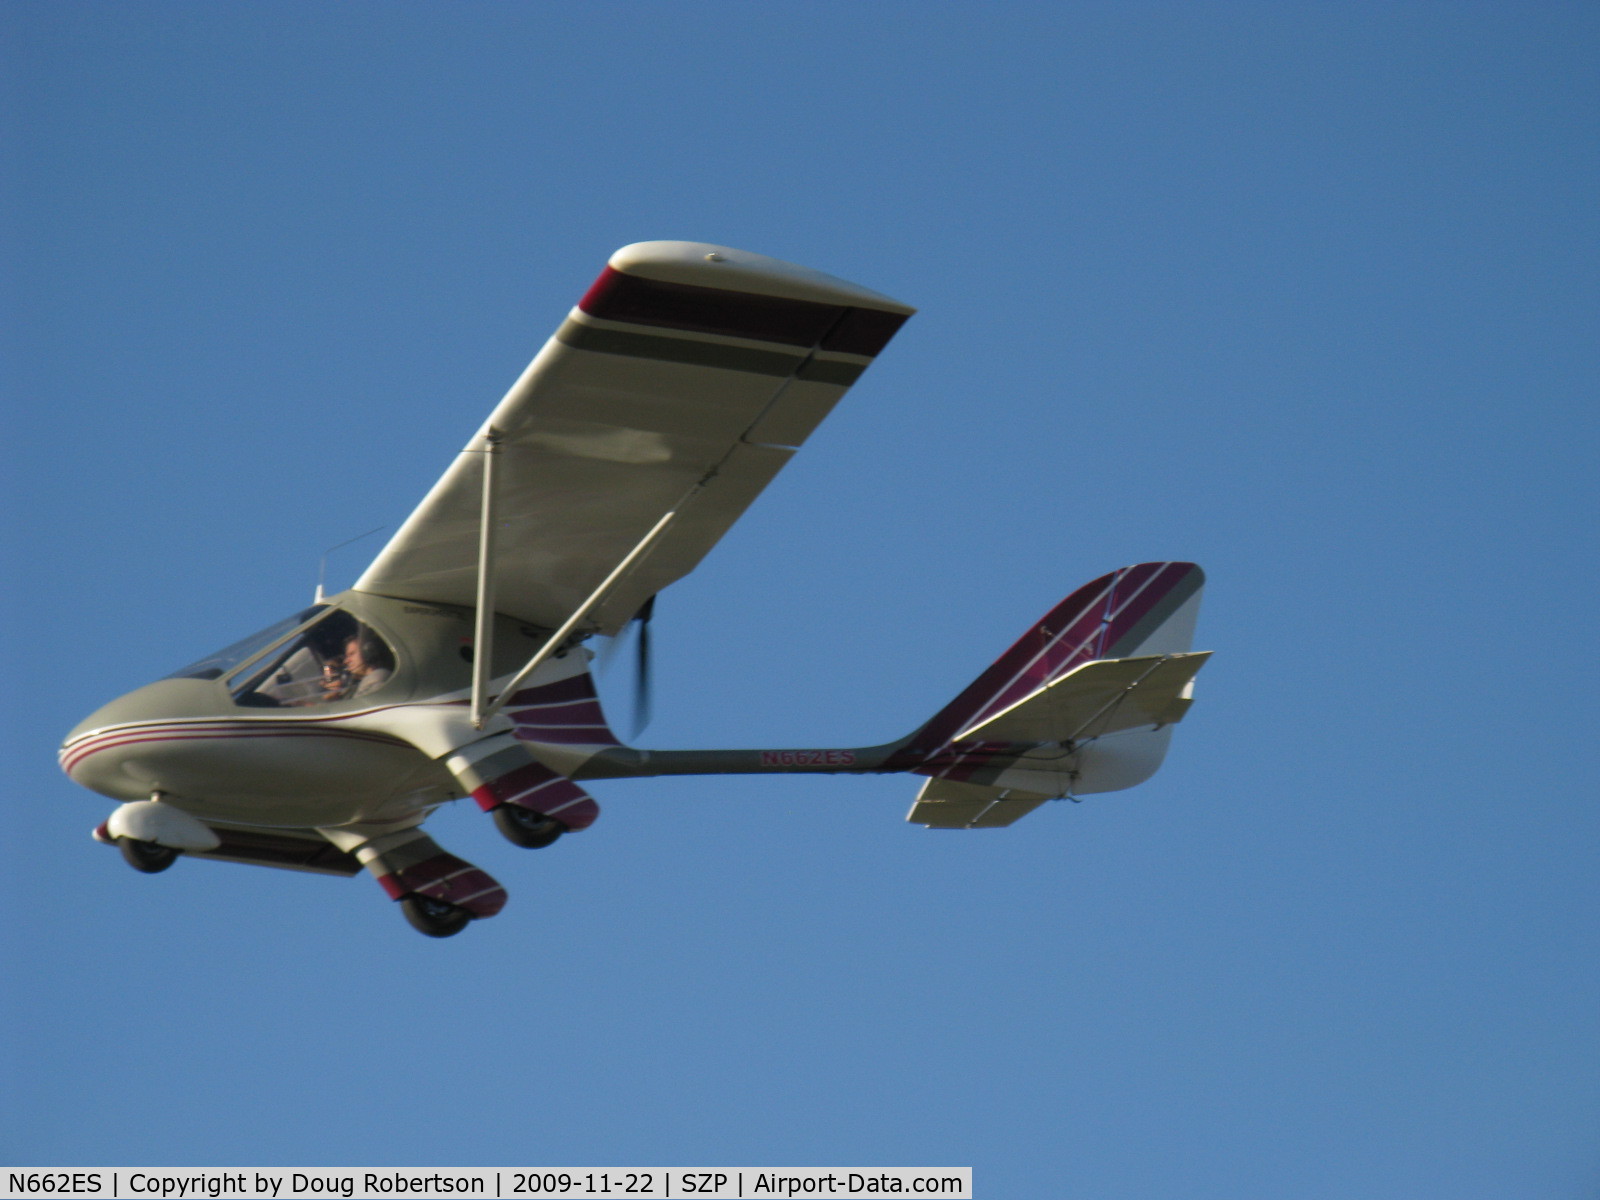 N662ES, Interplane Skyboy C/N AS-001, 2007 Interplane SKYBOY, Rotax 912ULS 100 Hp pusher, Experimental LSA class, on final Rwy 22